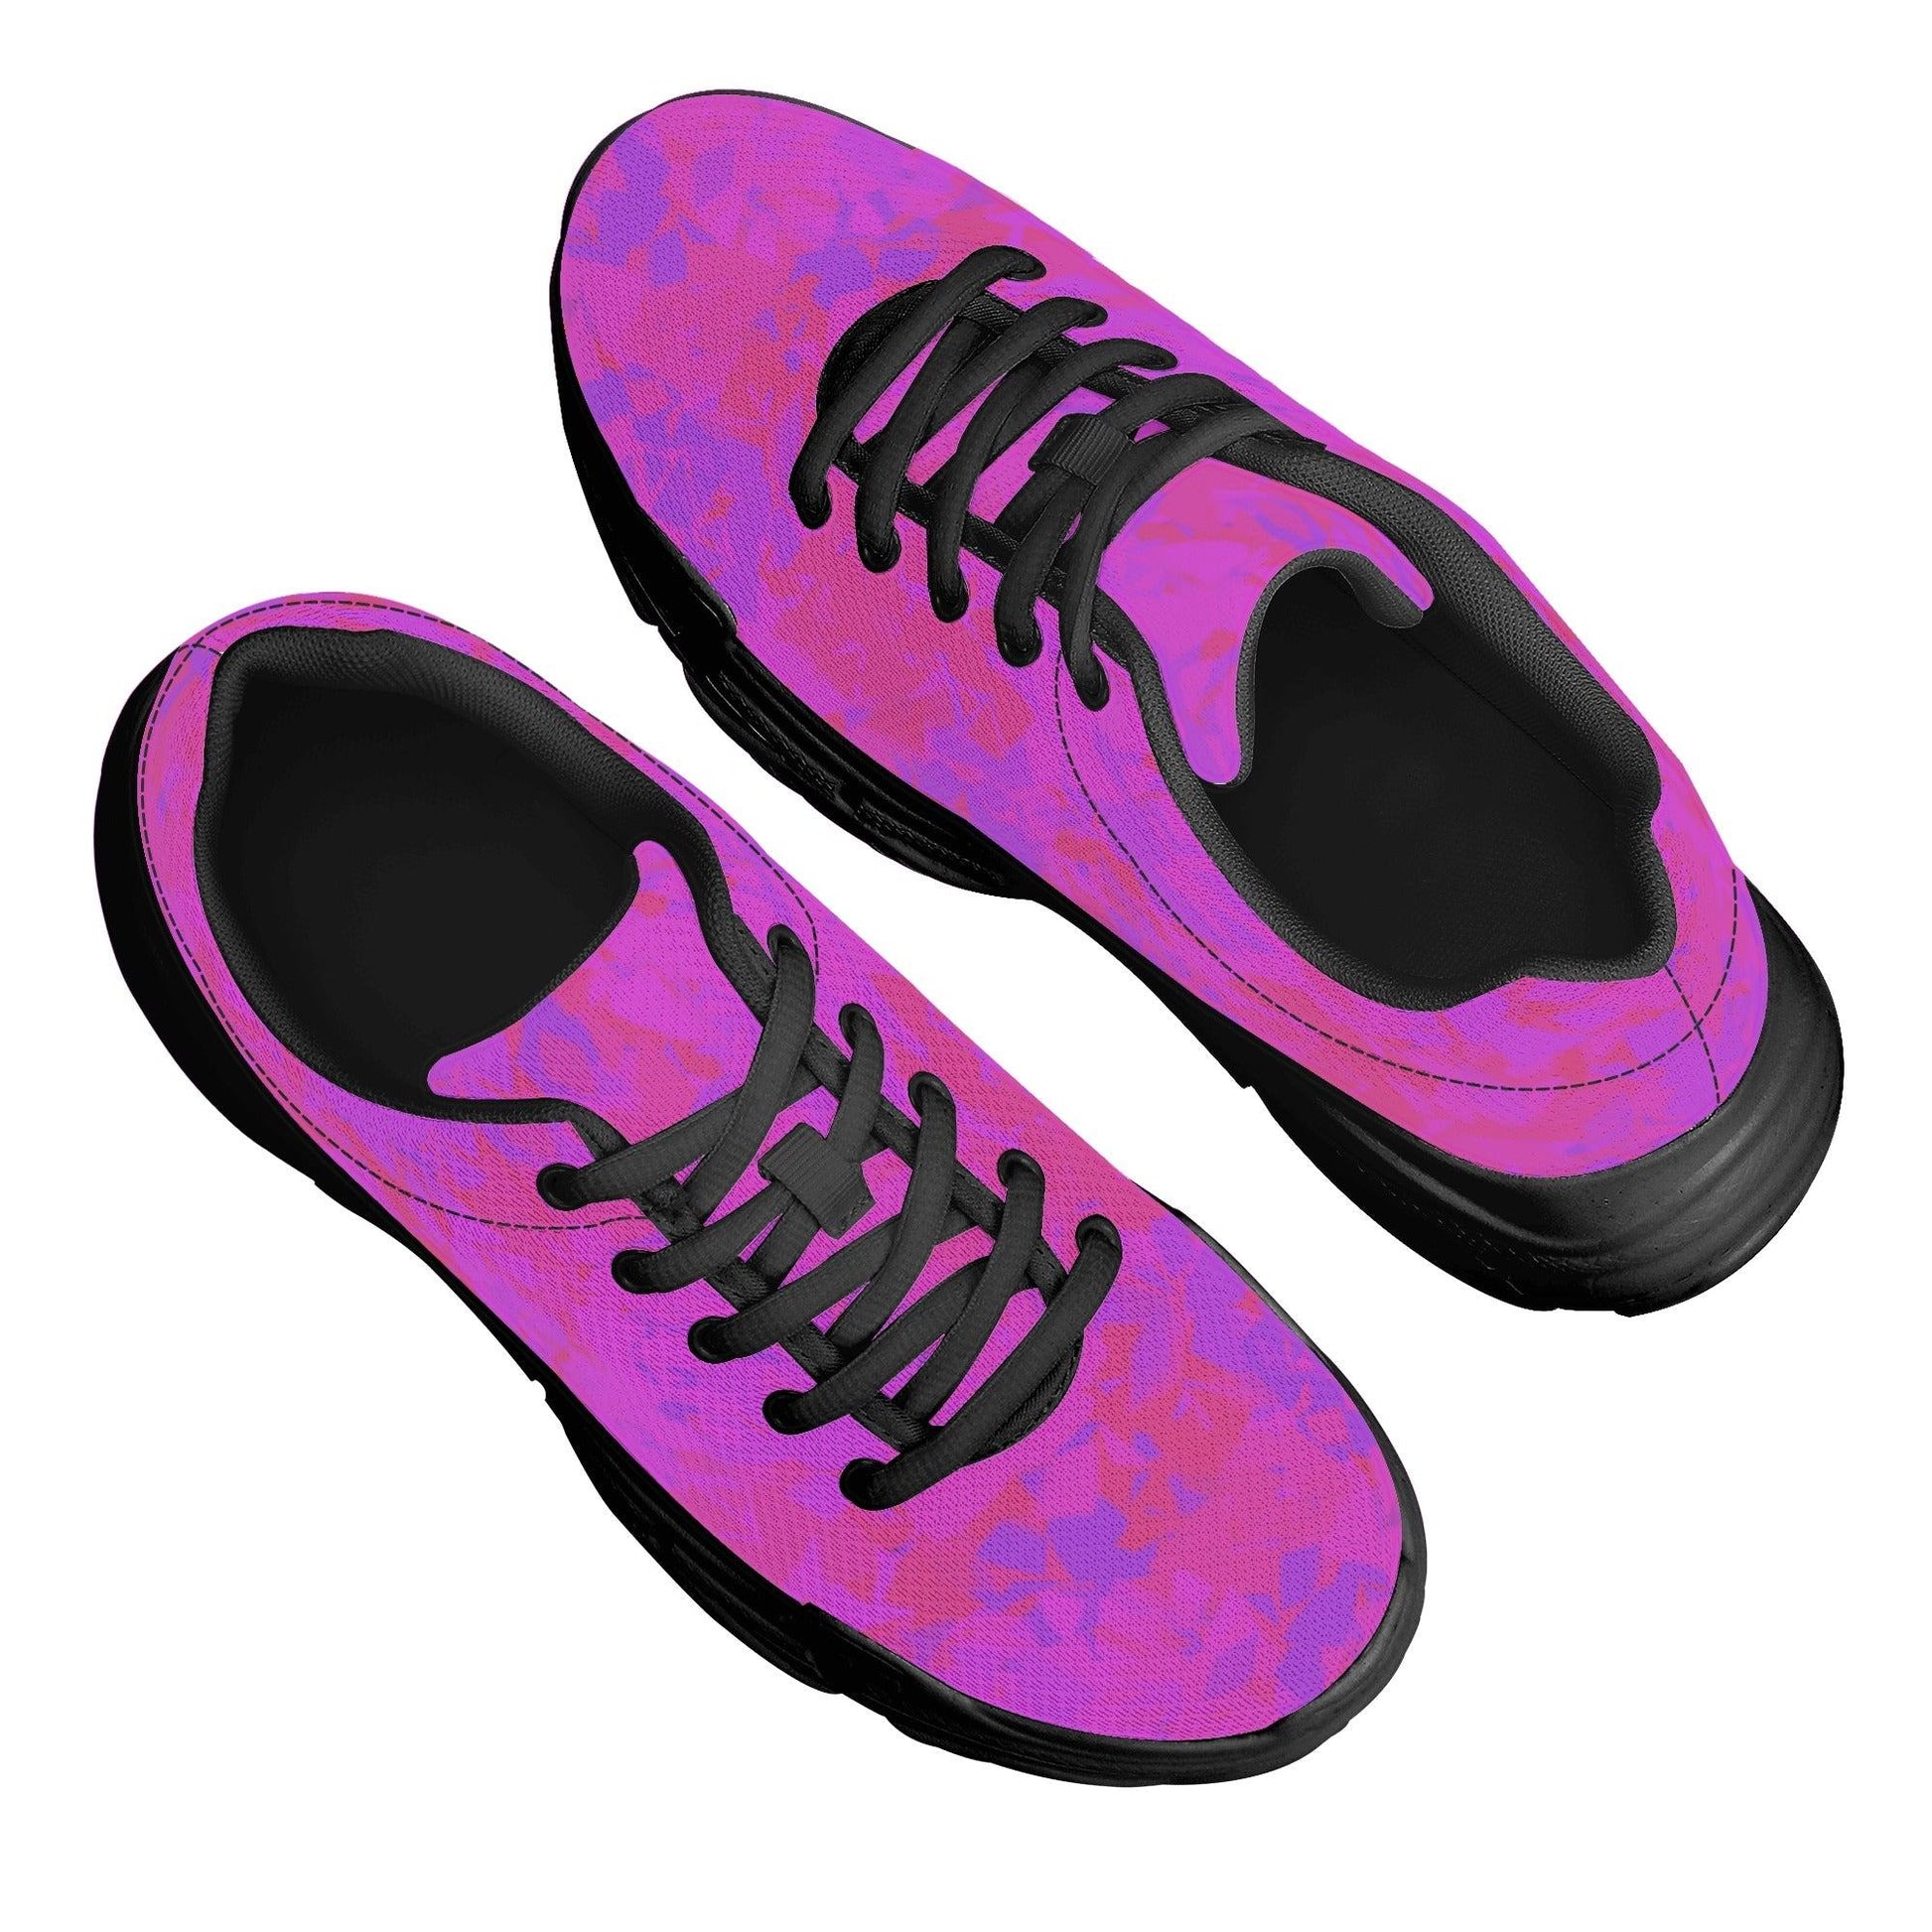 Pink Crystal Herren Chunky Sneakers Schuhe 79.99 Chunky, Crystal, Herren, Pink, Schuhe, Sneaker JLR Design